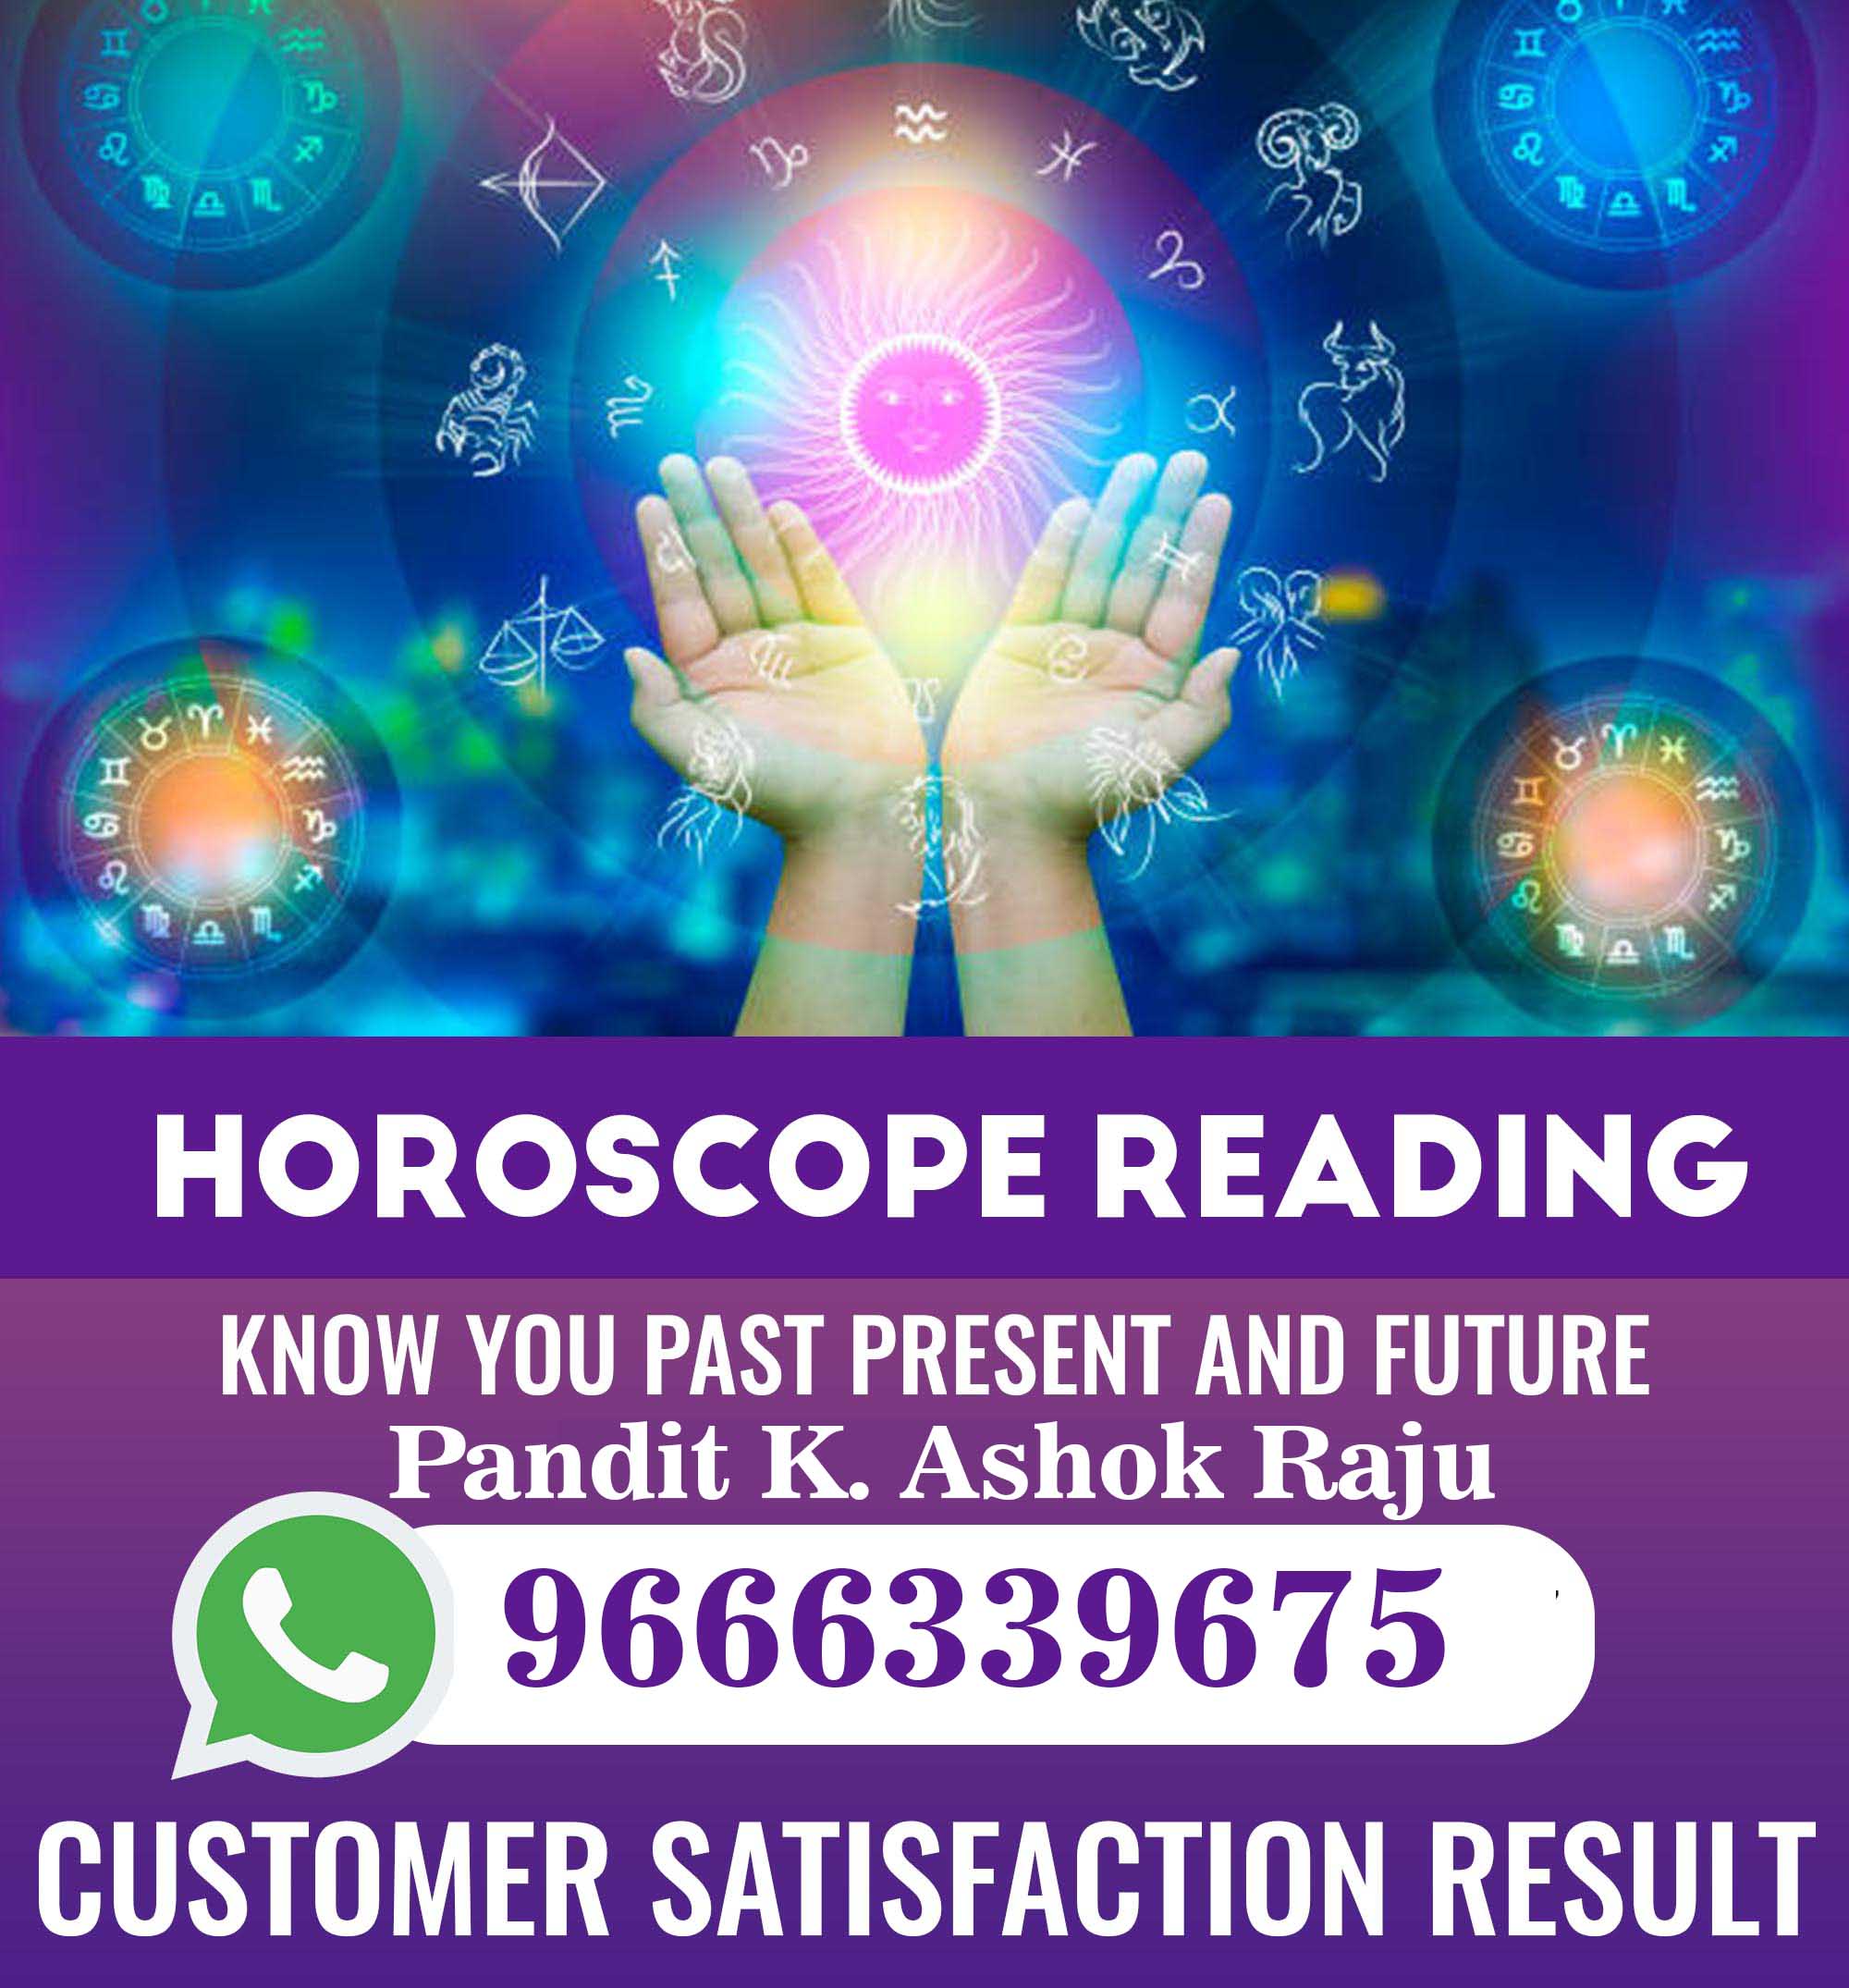 Pandit K. Ashok Raju Astrology Services Banner